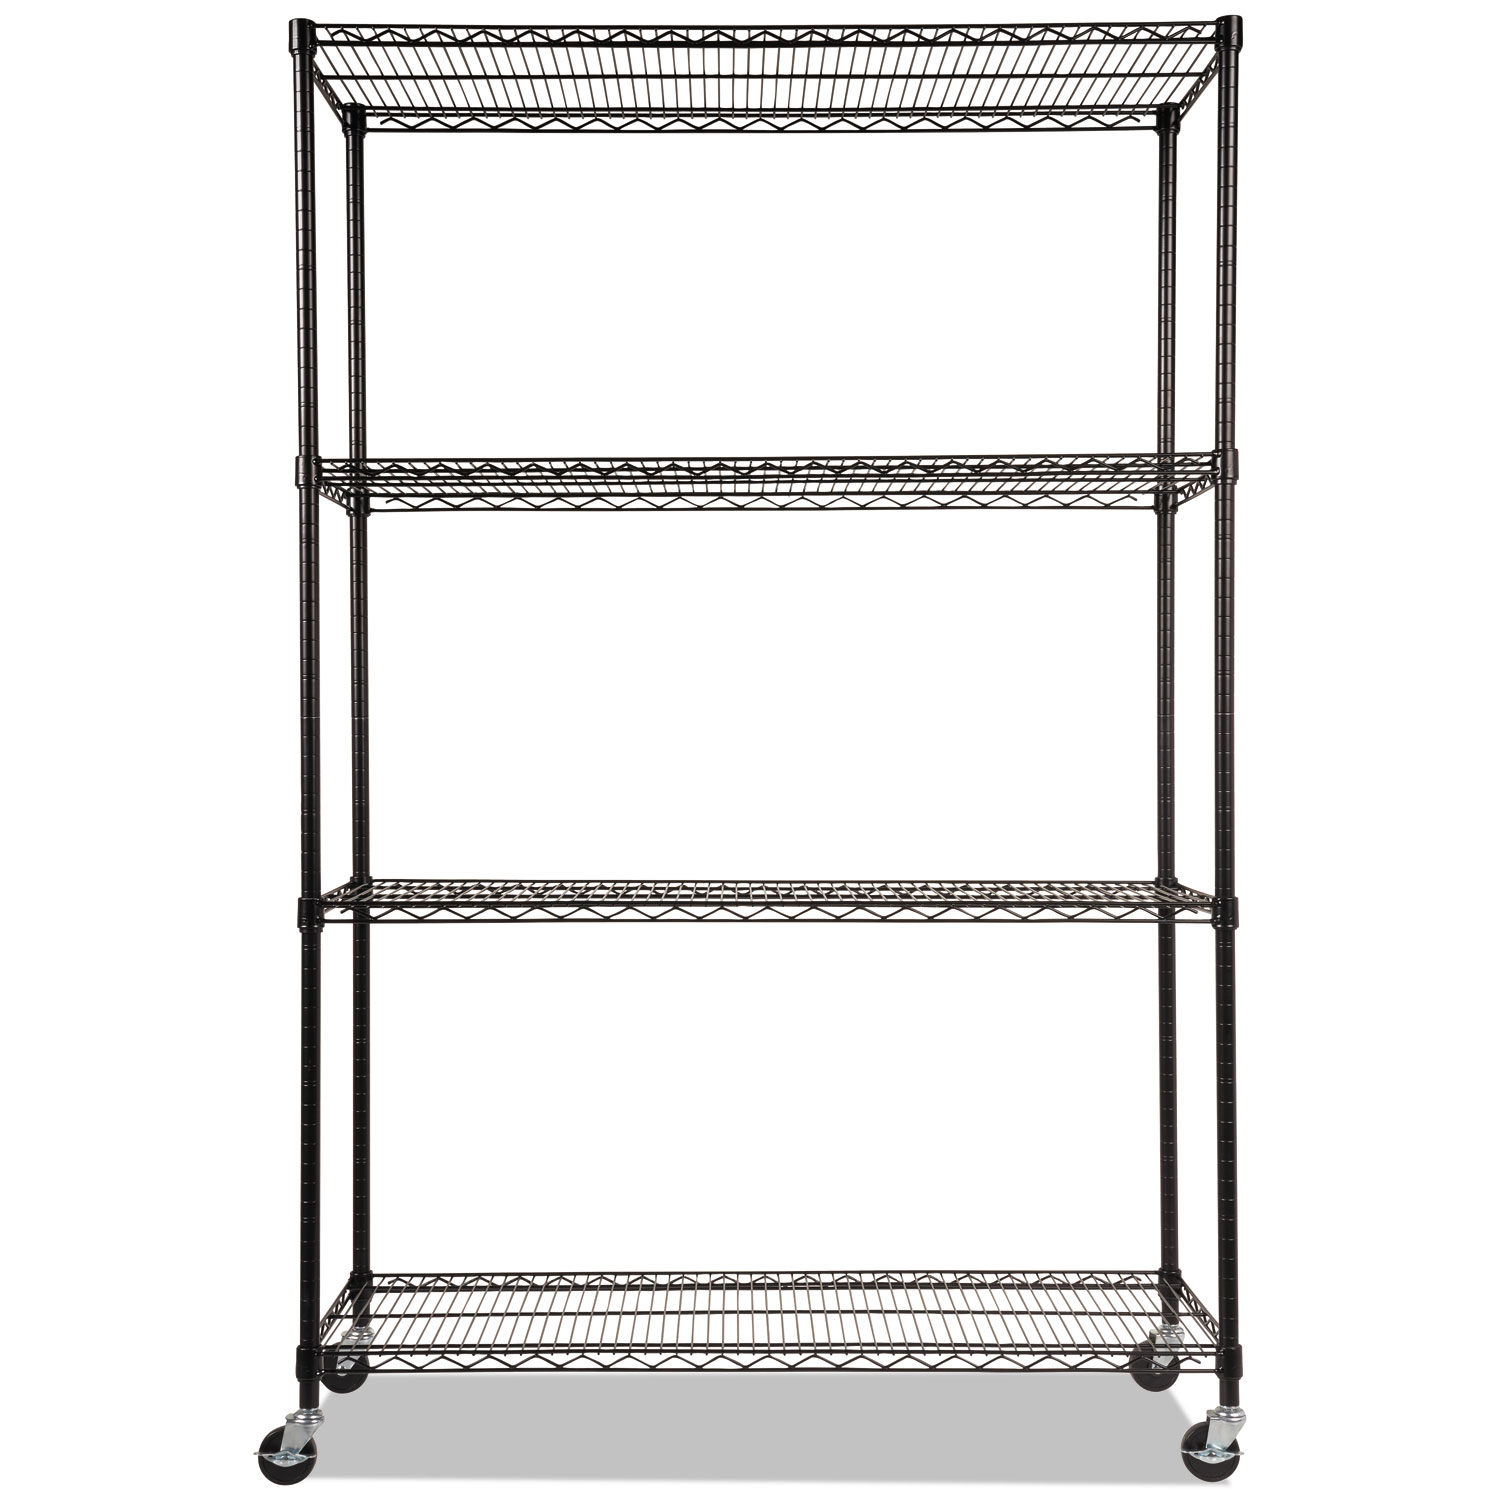 NSF Certified 4-Shelf Wire Shelving Kit w/Casters & Liners, 48 x 18 x 72, Black